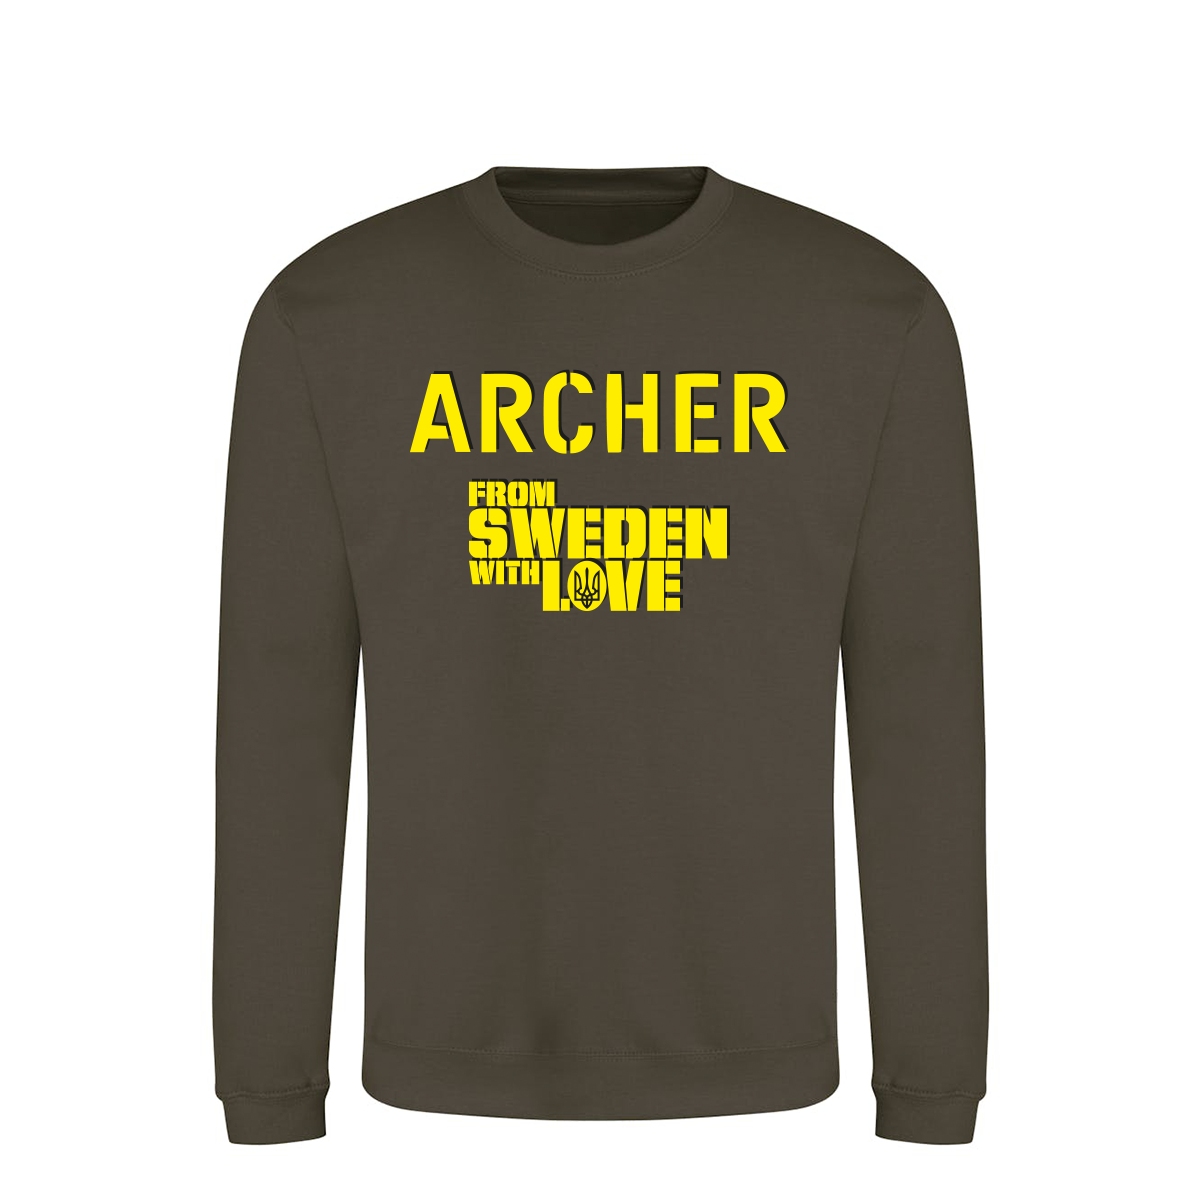 ARCHER - Crewneck